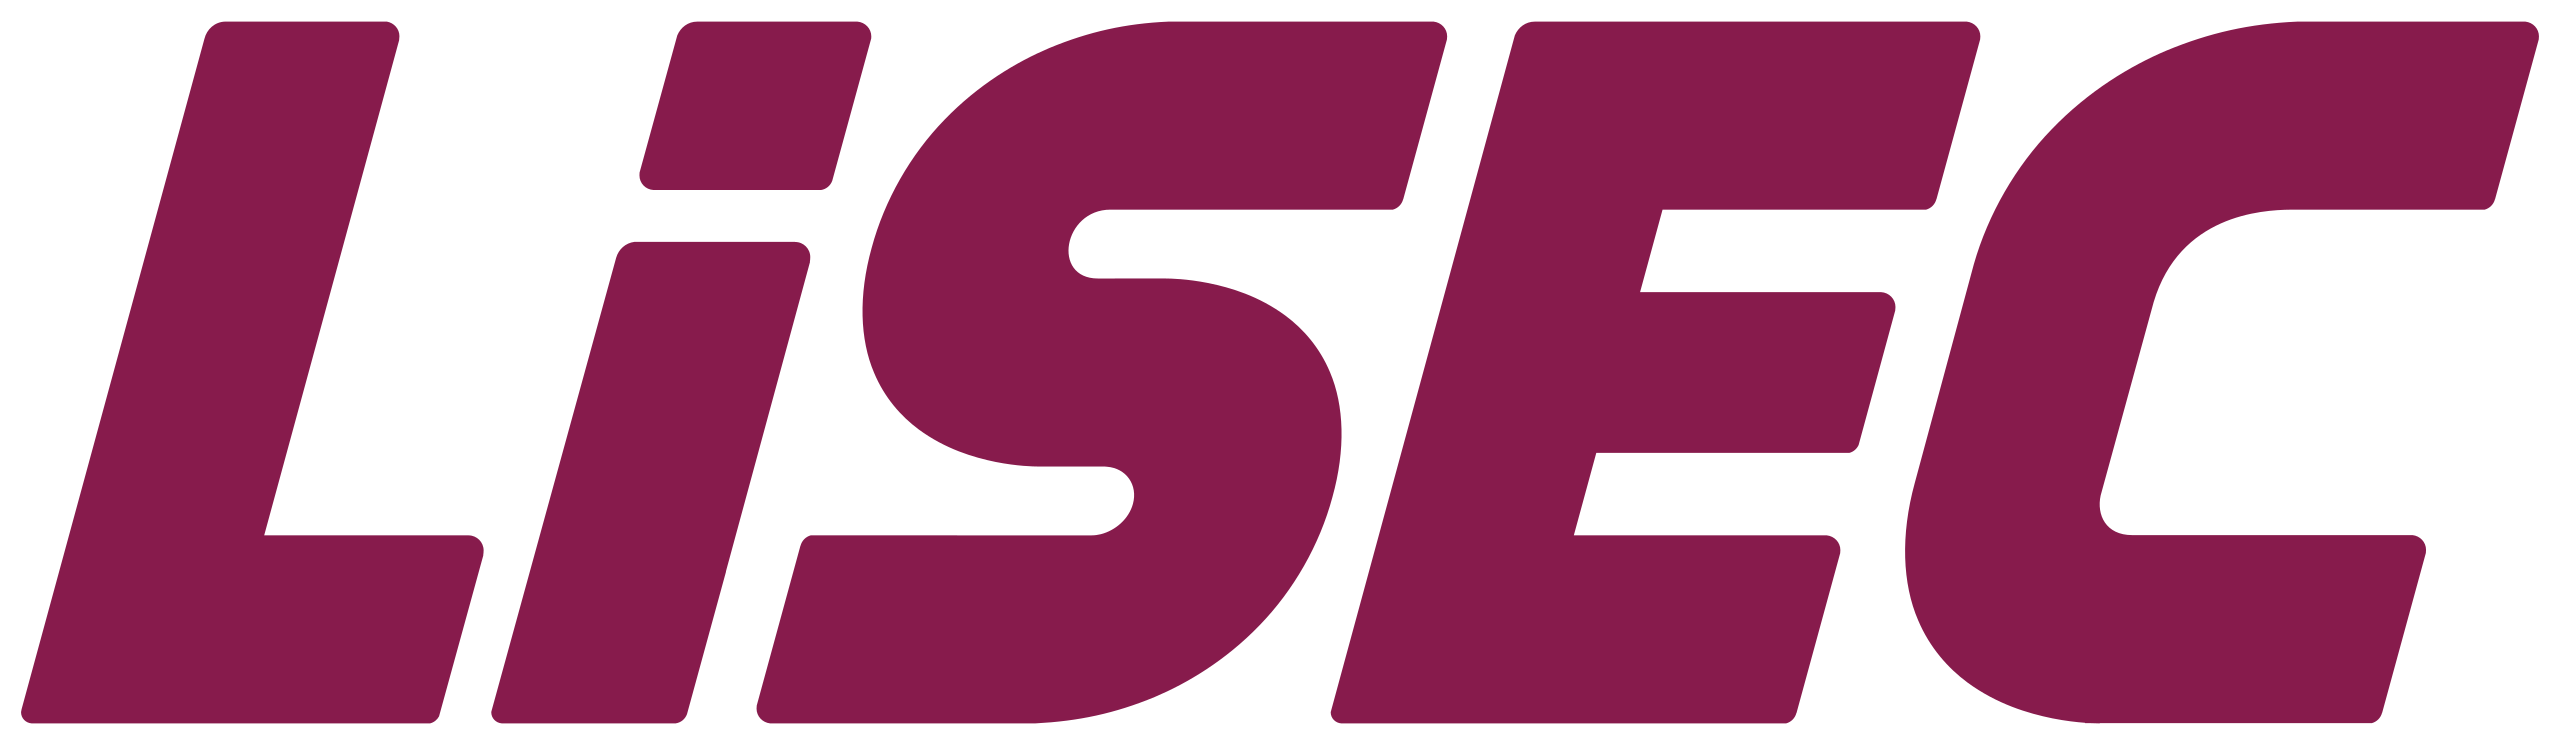 2560px-LiSEC_logo.svg